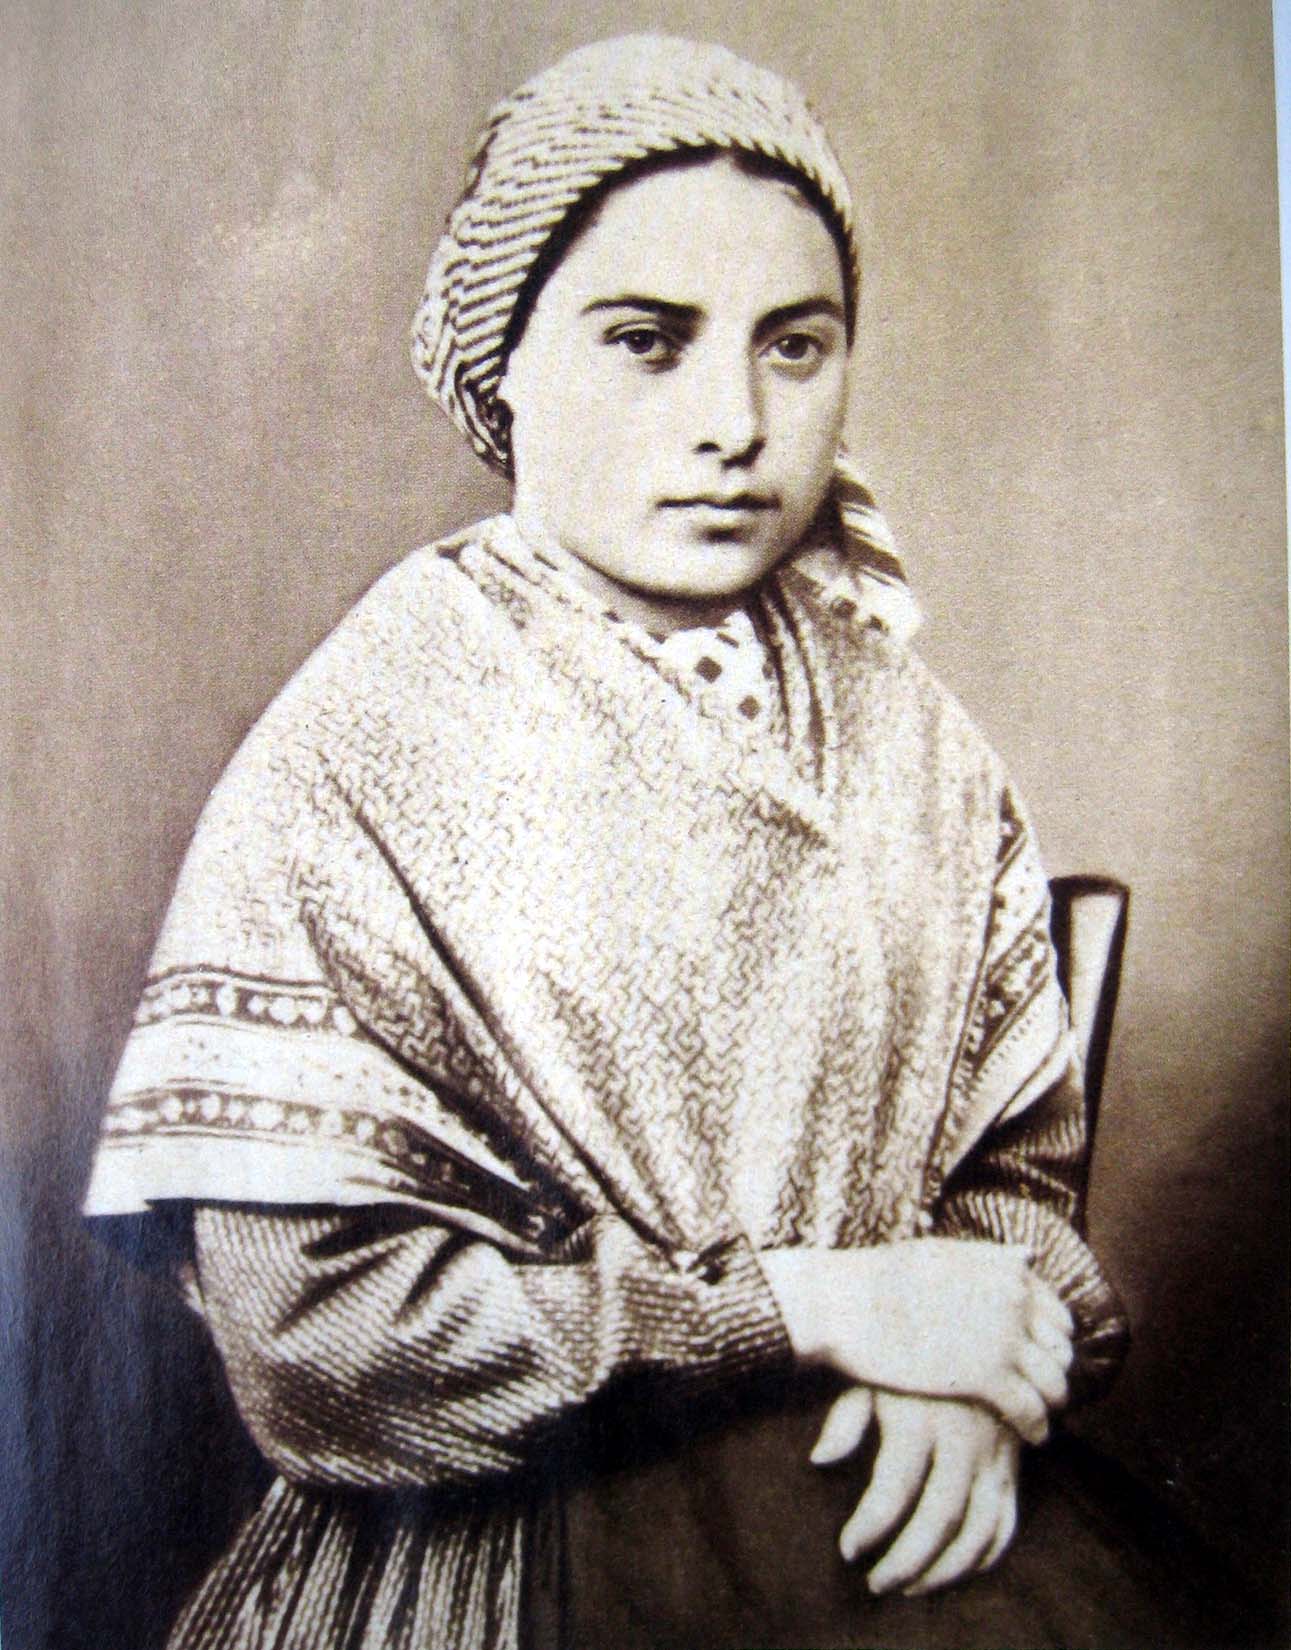 Pildiotsingu Bernadette Soubirous 1858 tulemus